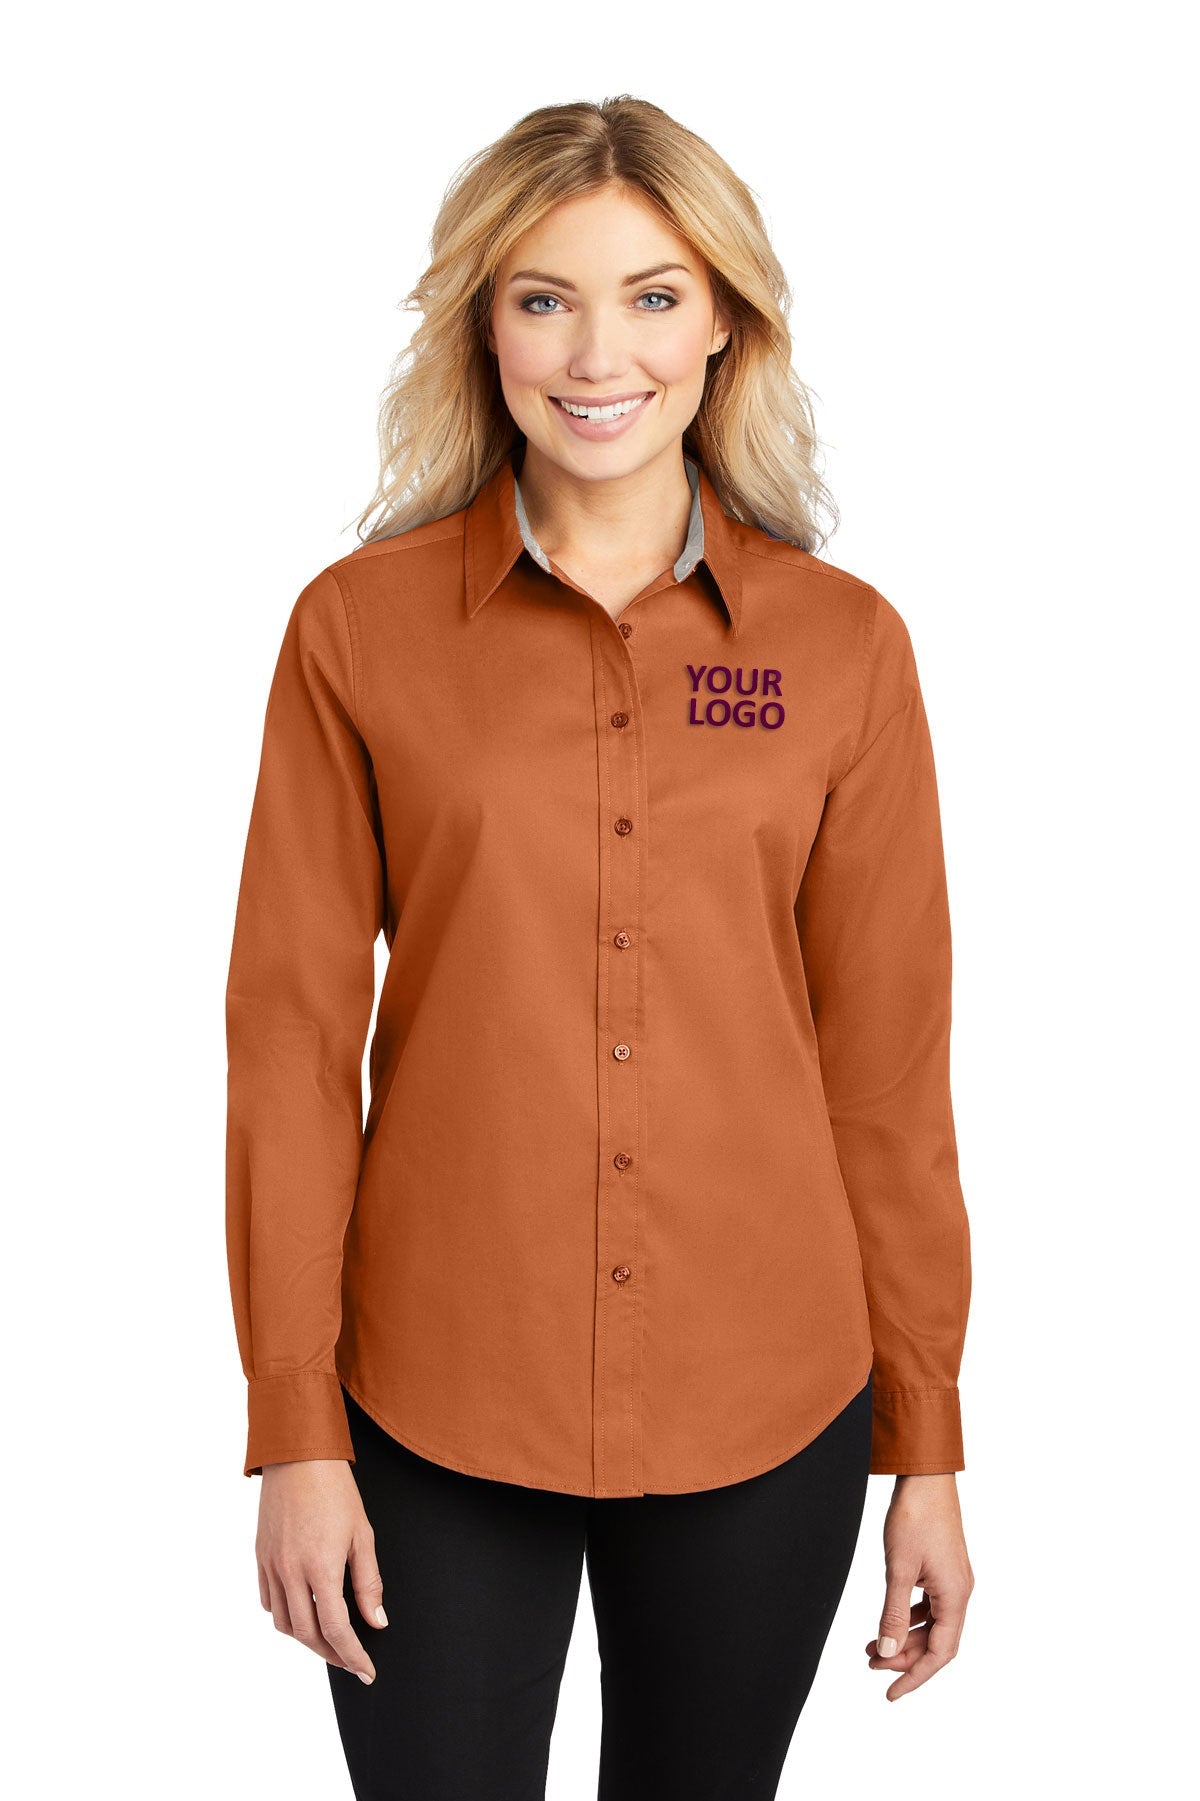 Port Authority Texas Orange/Light Stone L608 custom embroidered shirts